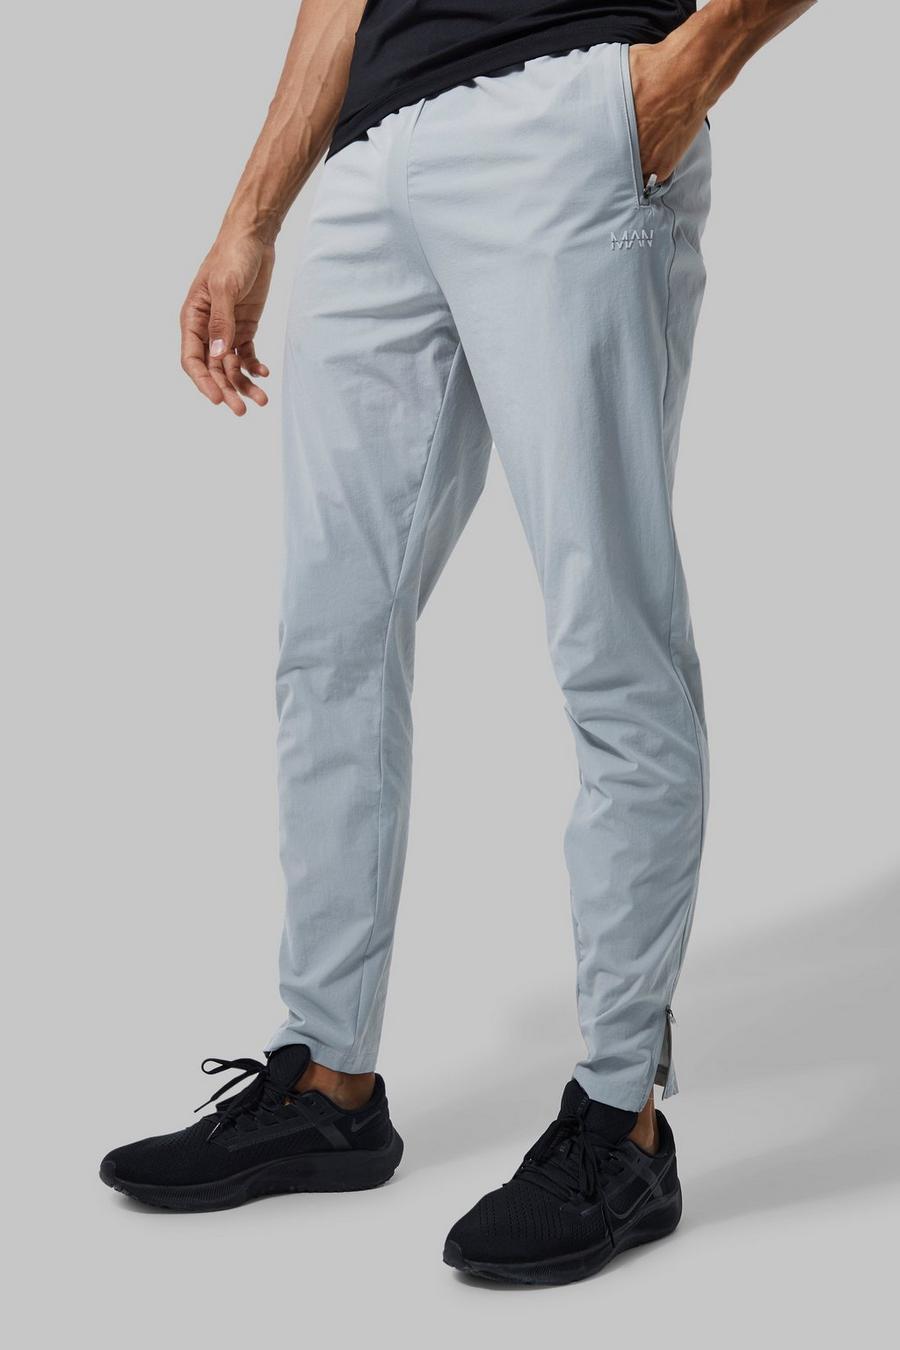 Pantalón deportivo Tall MAN Active ligero resistente, Light grey gris